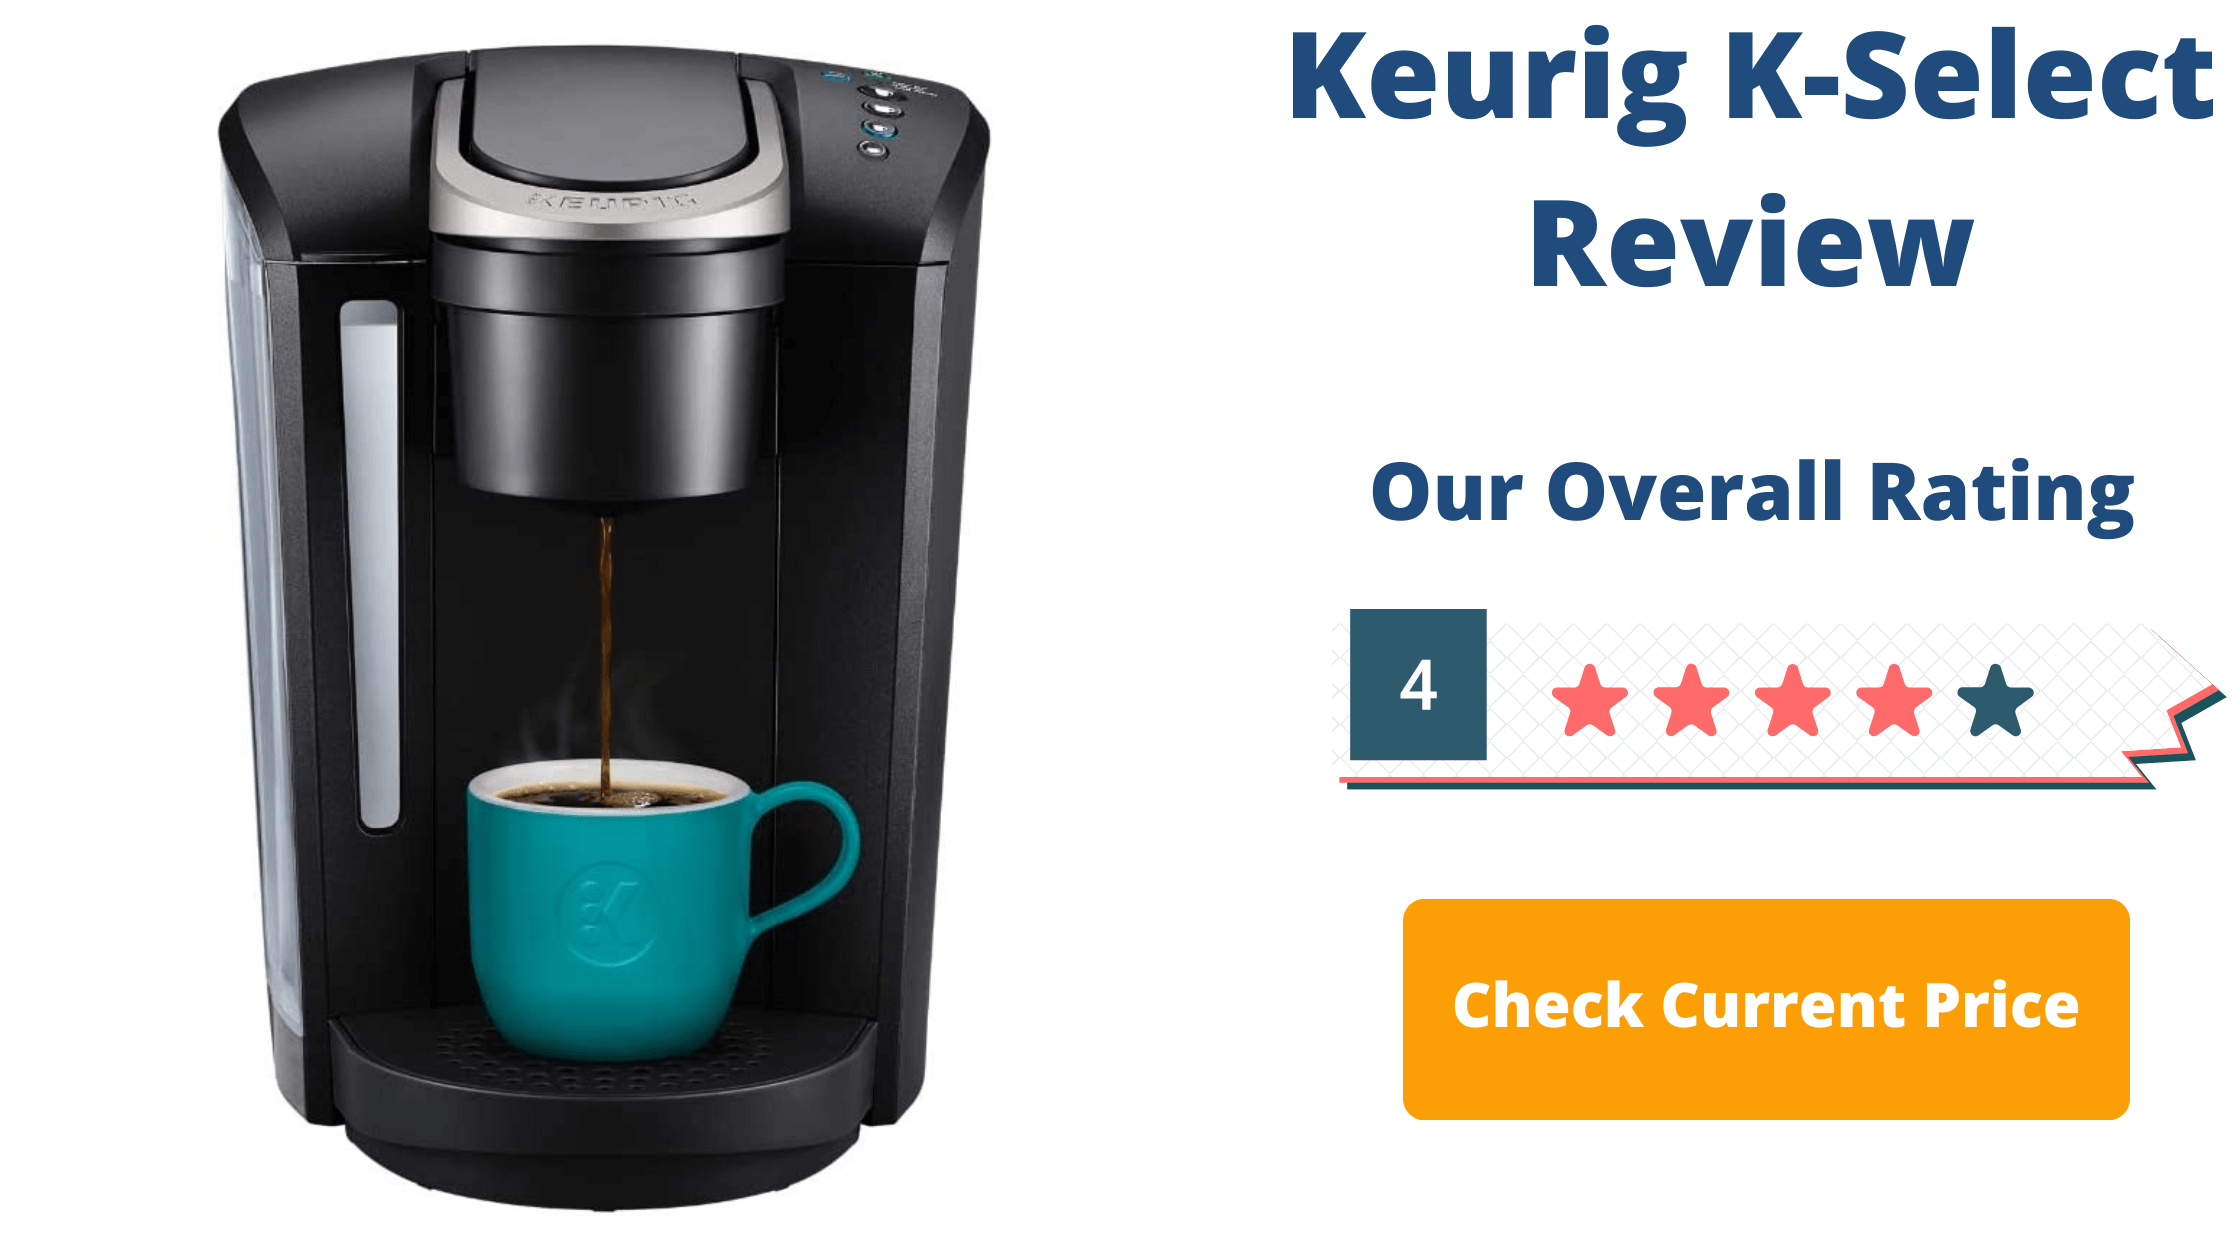 Keurig K-Select Single Serve K-Cup Coffee Brewer Review